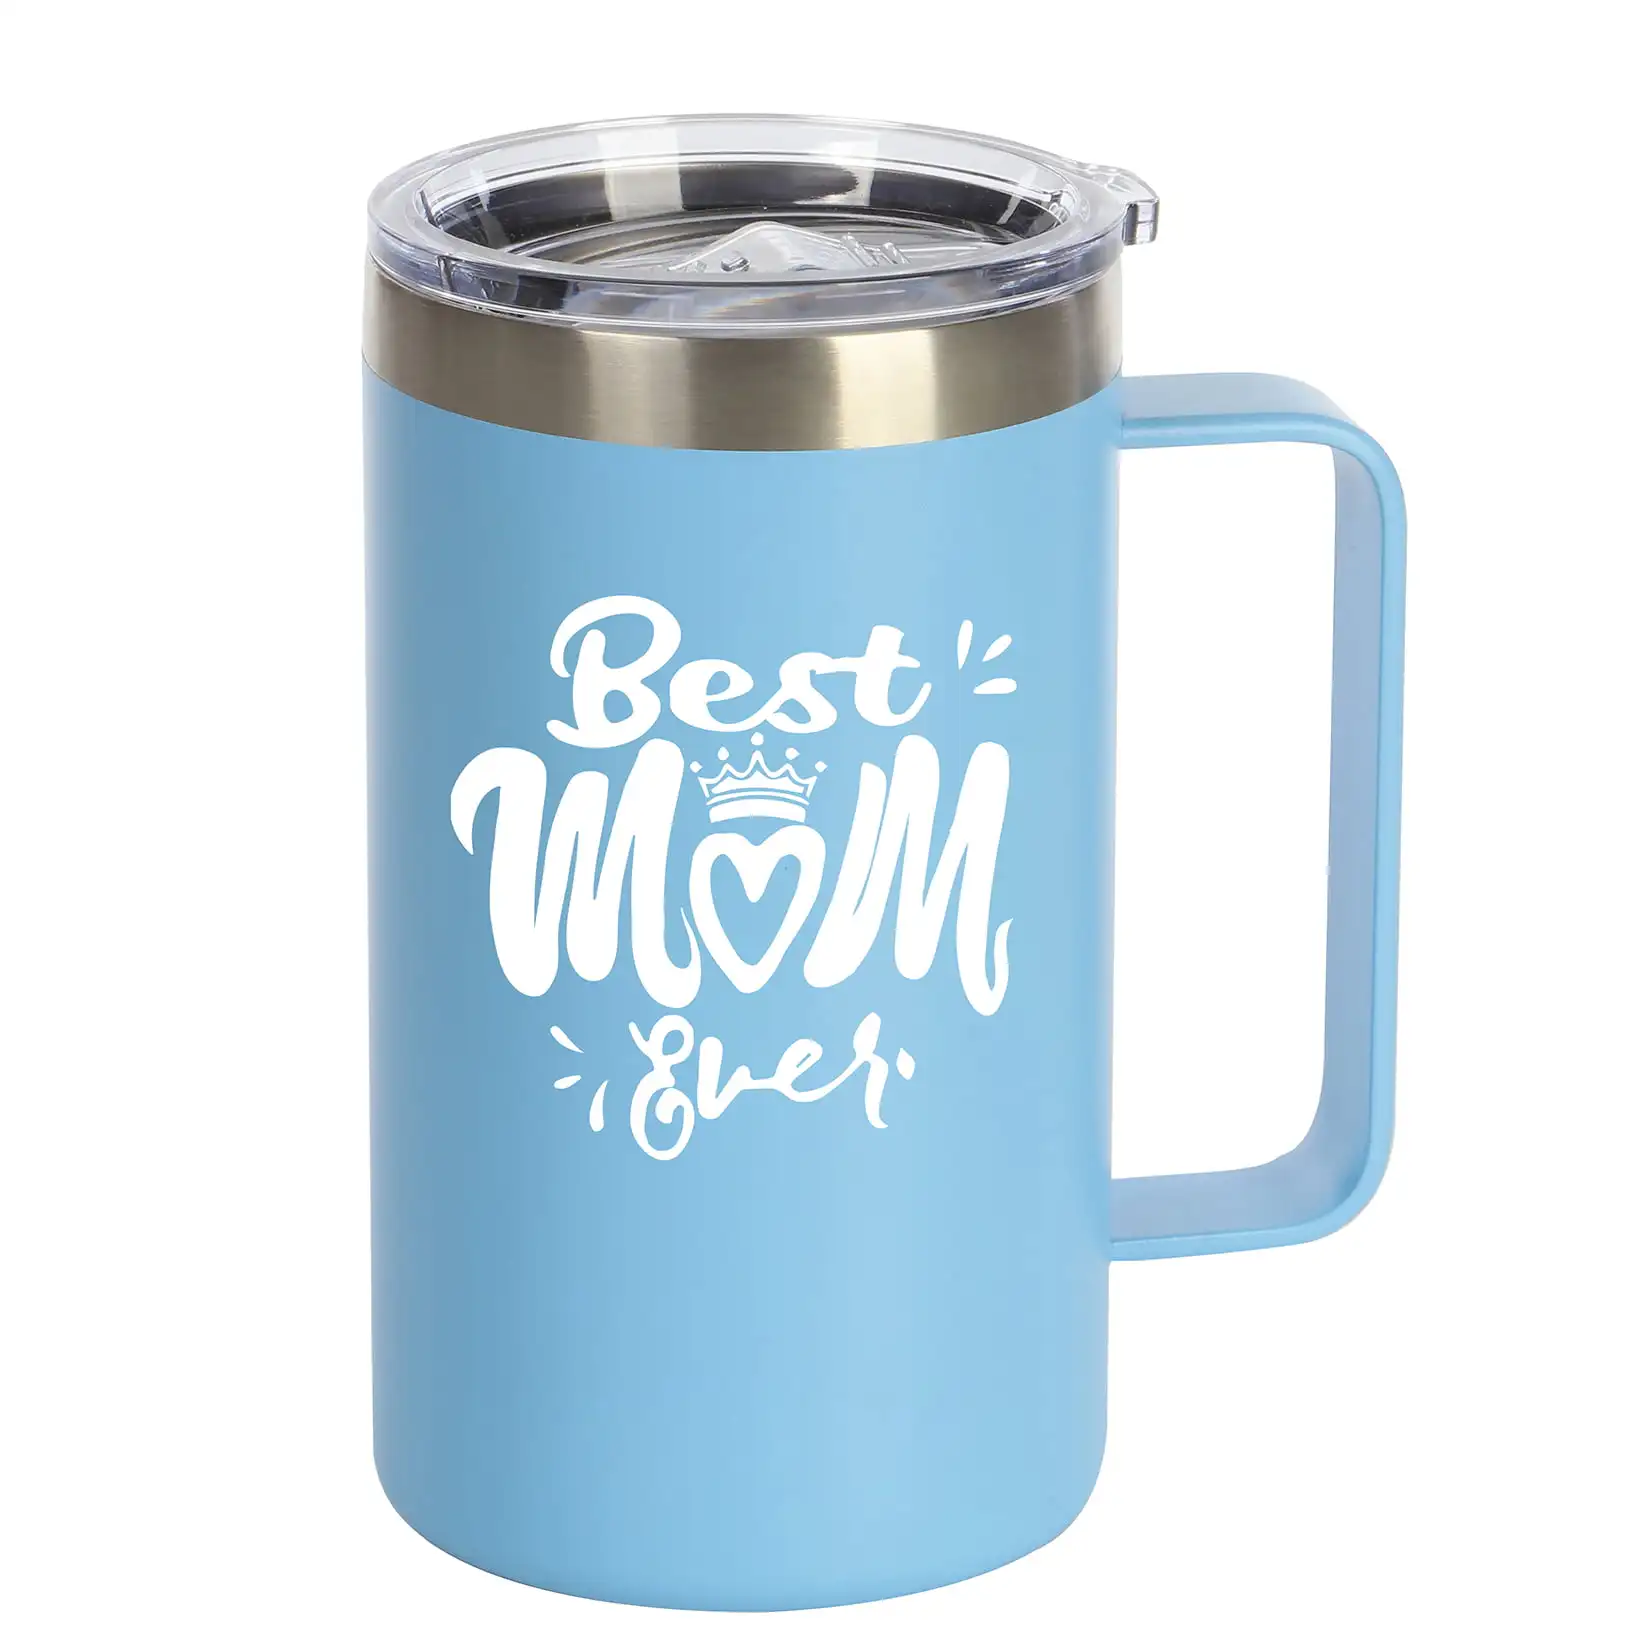 https://ae01.alicdn.com/kf/S2261865249764ea097862e3260b40882d/Best-Mom-Ever-Gift-Ezprogear-24-oz-Stainless-Steel-Coffee-Mug-Double-Wall-Insulated-Beer-Tumbler.jpg